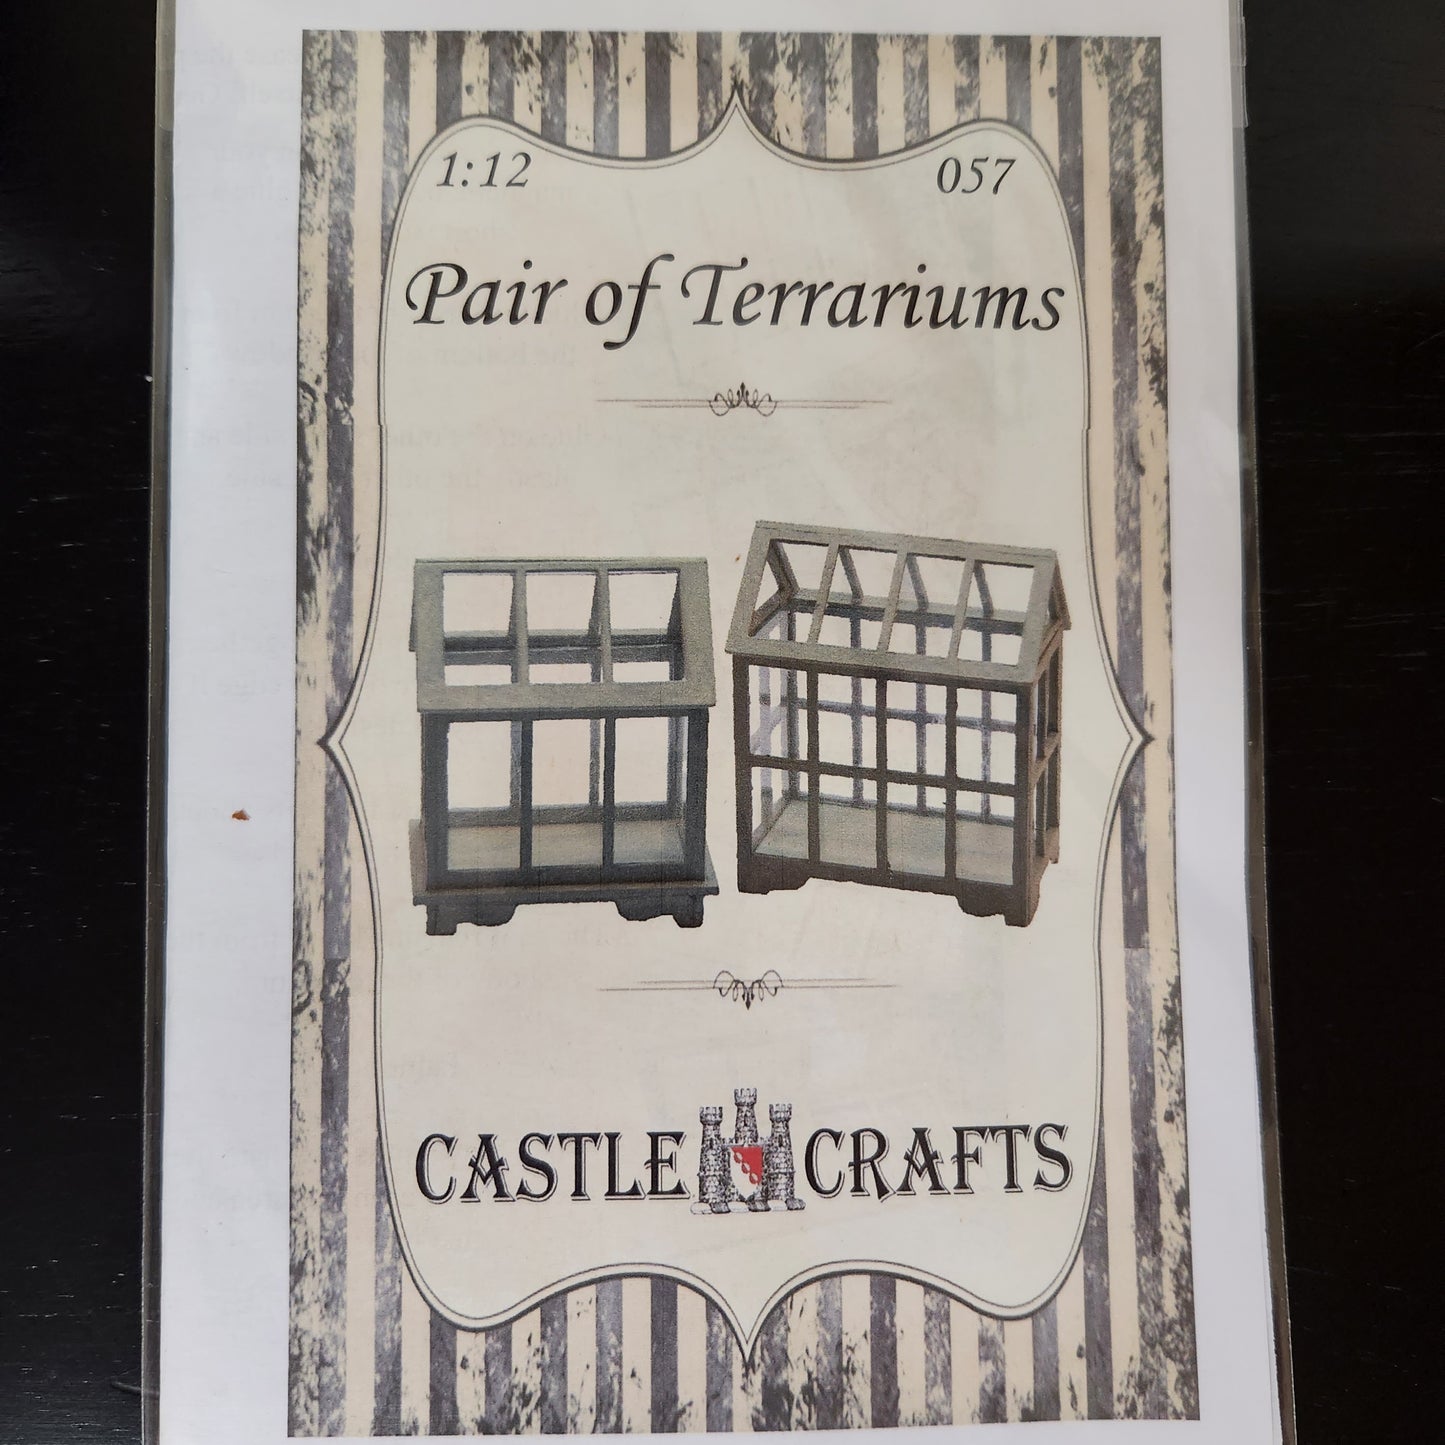 Kit - Pair of Terrariums #057